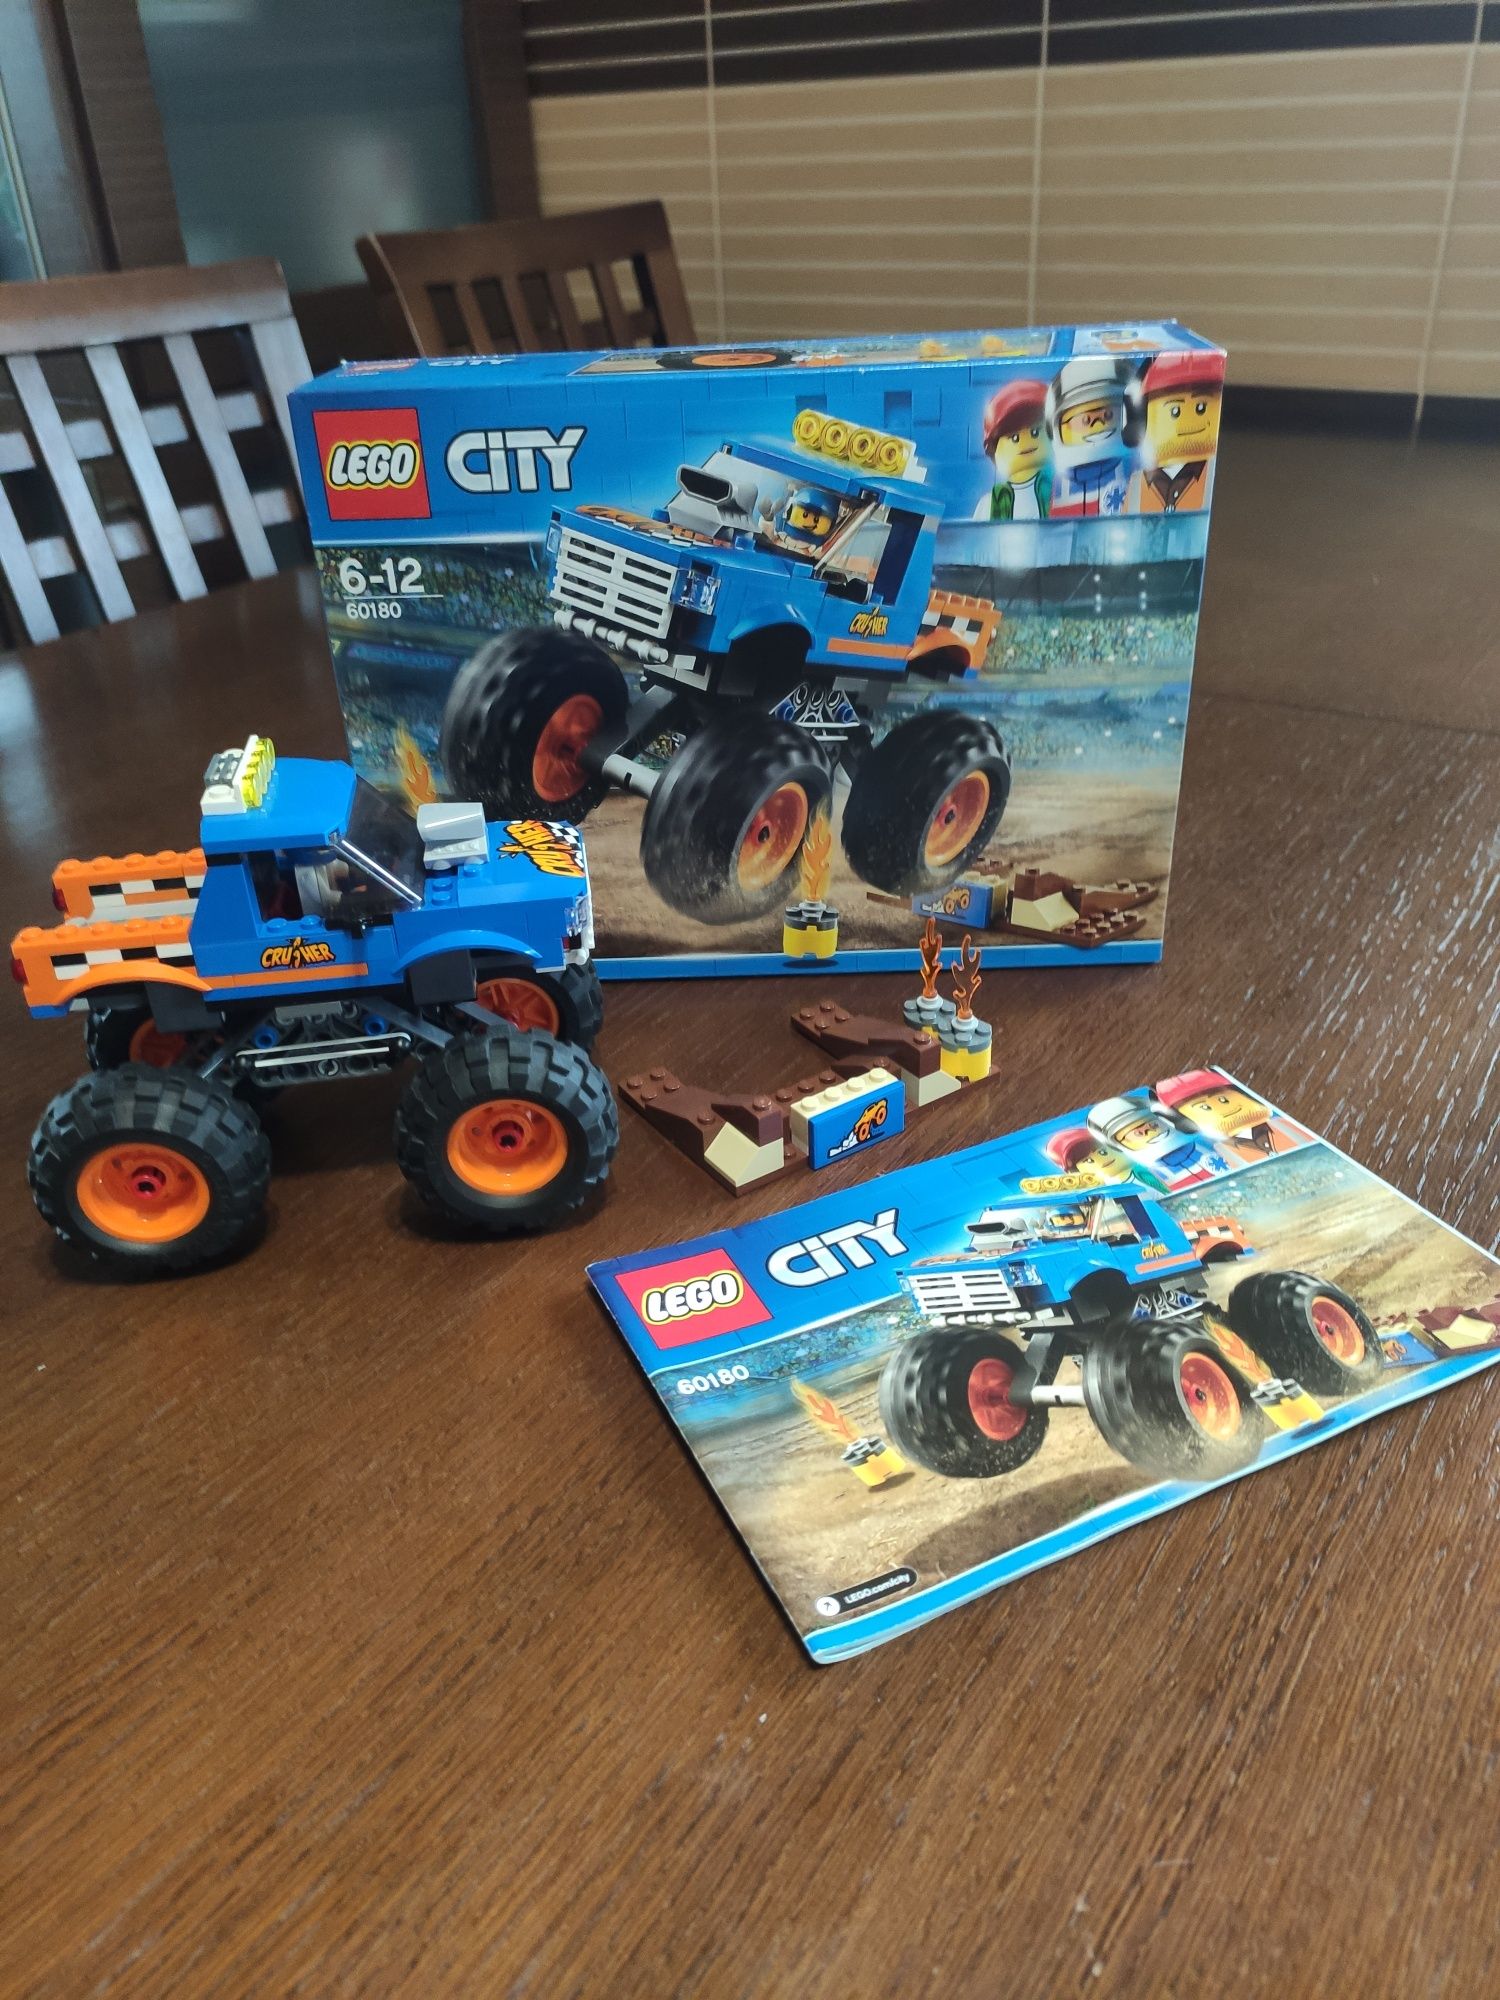 Klocki LEGO City Munster Truck 60180